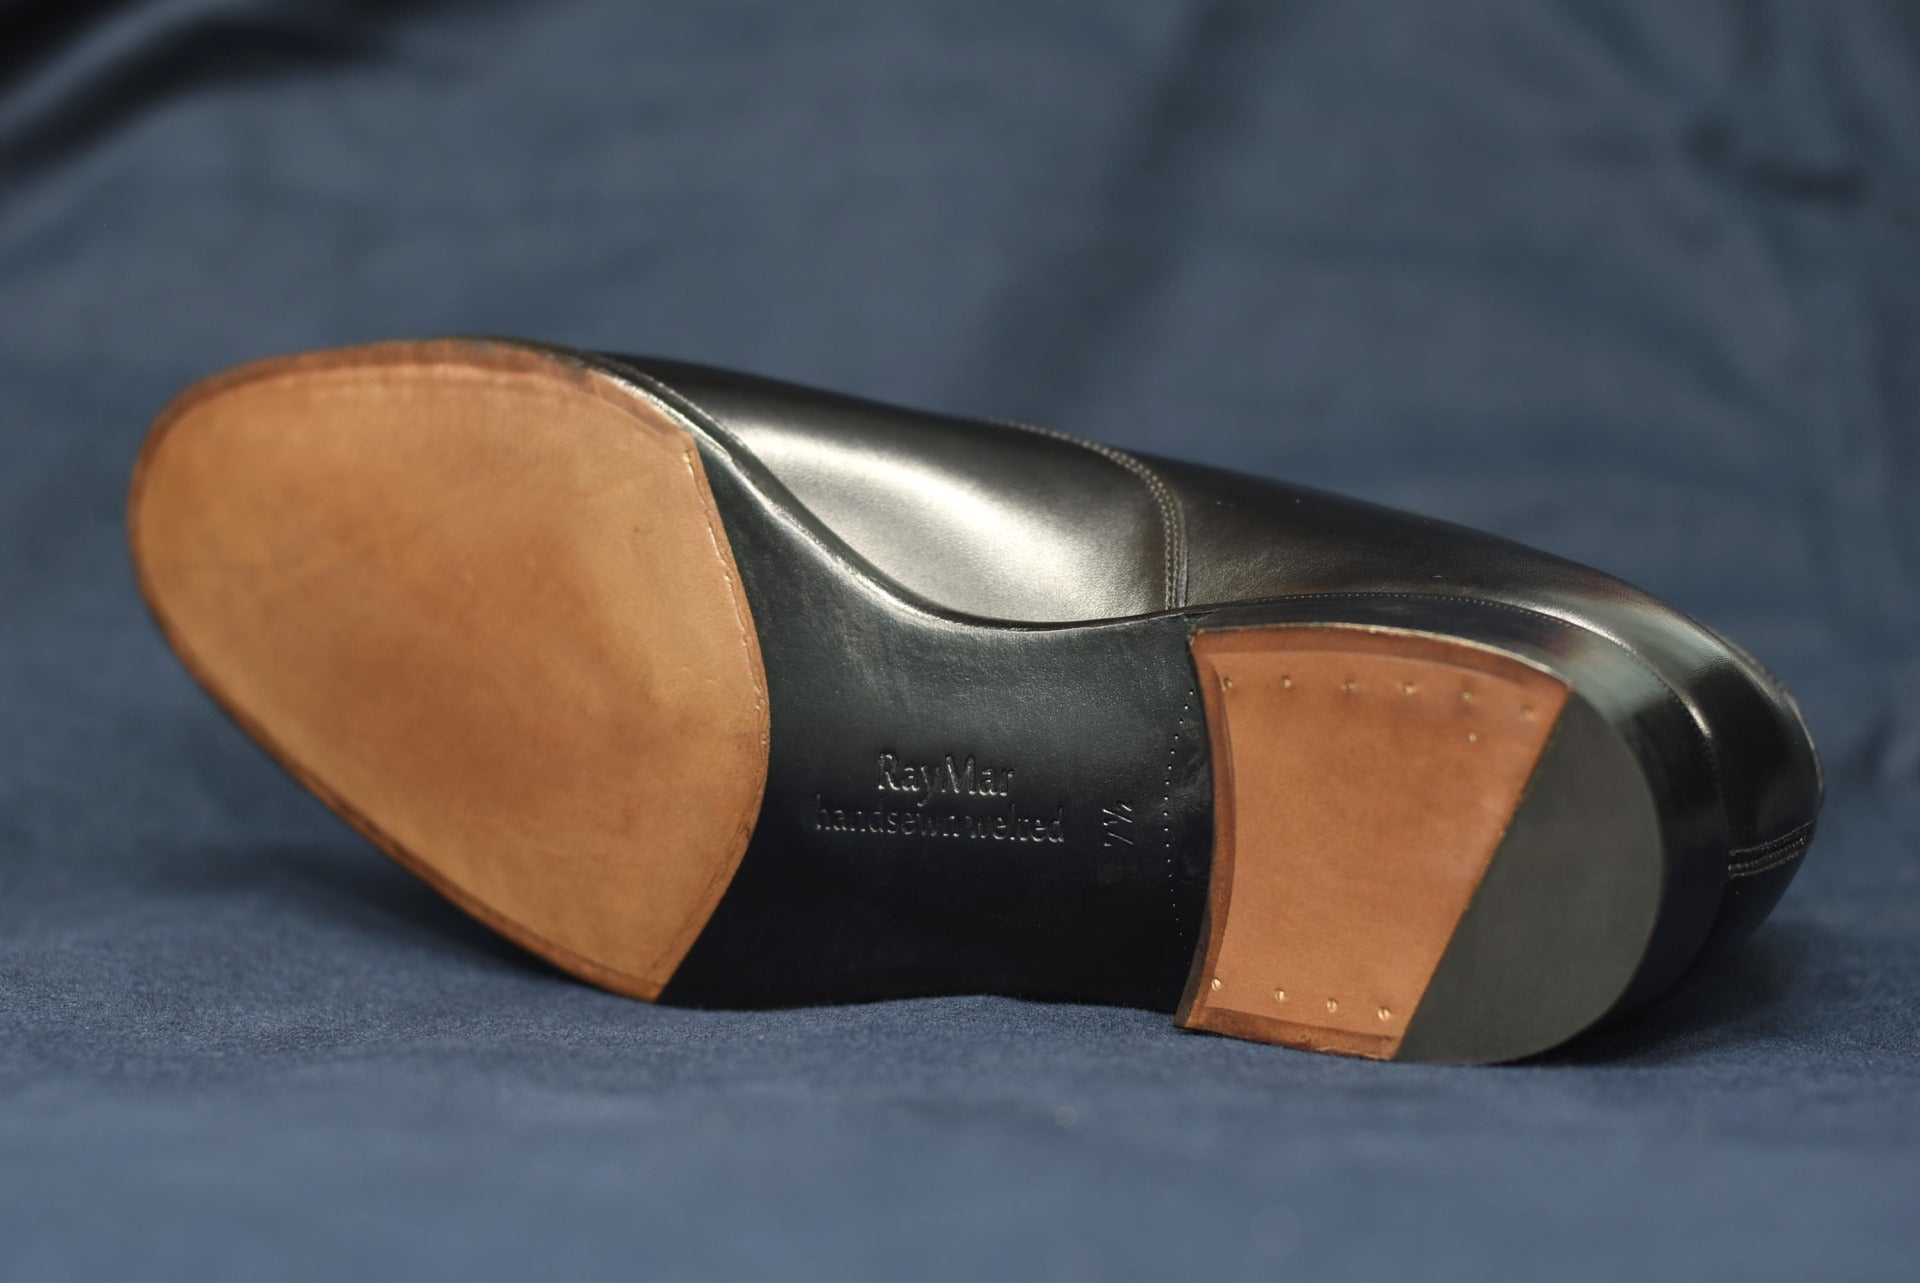 PASSUS SHOES Dean Handmade Black Box Calf Cap Toe Derby Shoes US